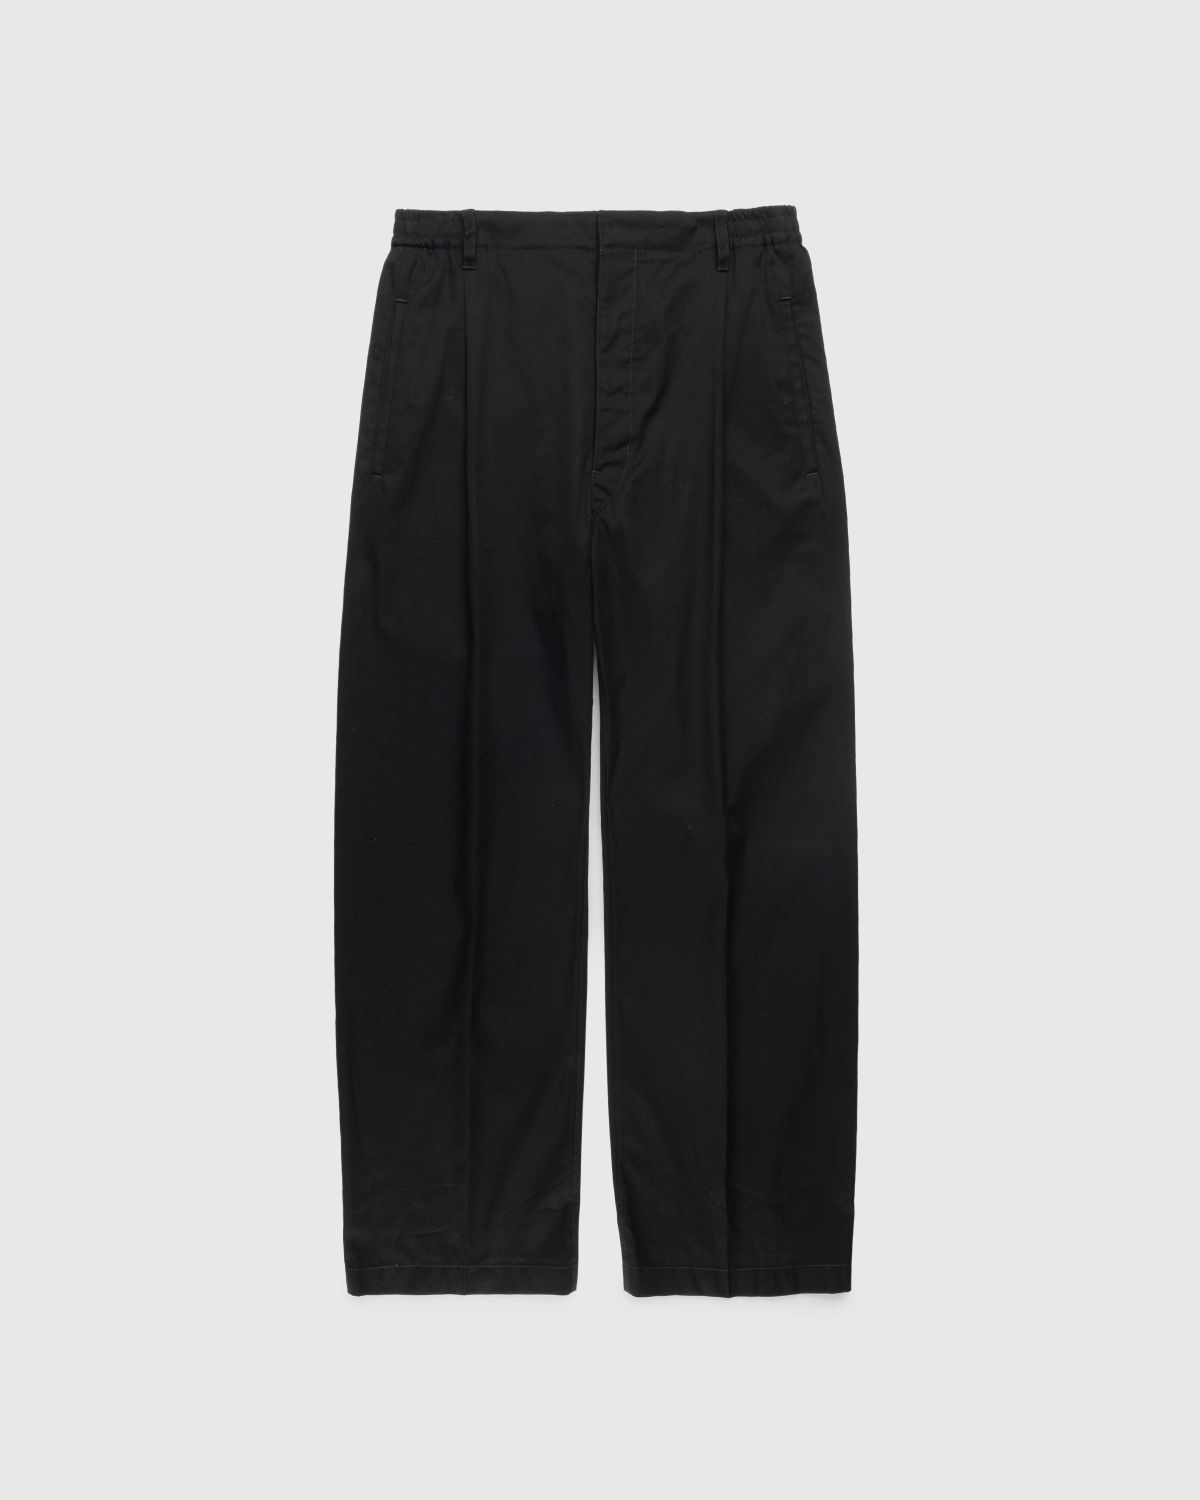 Lemaire – Easy Pleated Pants Black - Pants - Black - Image 1